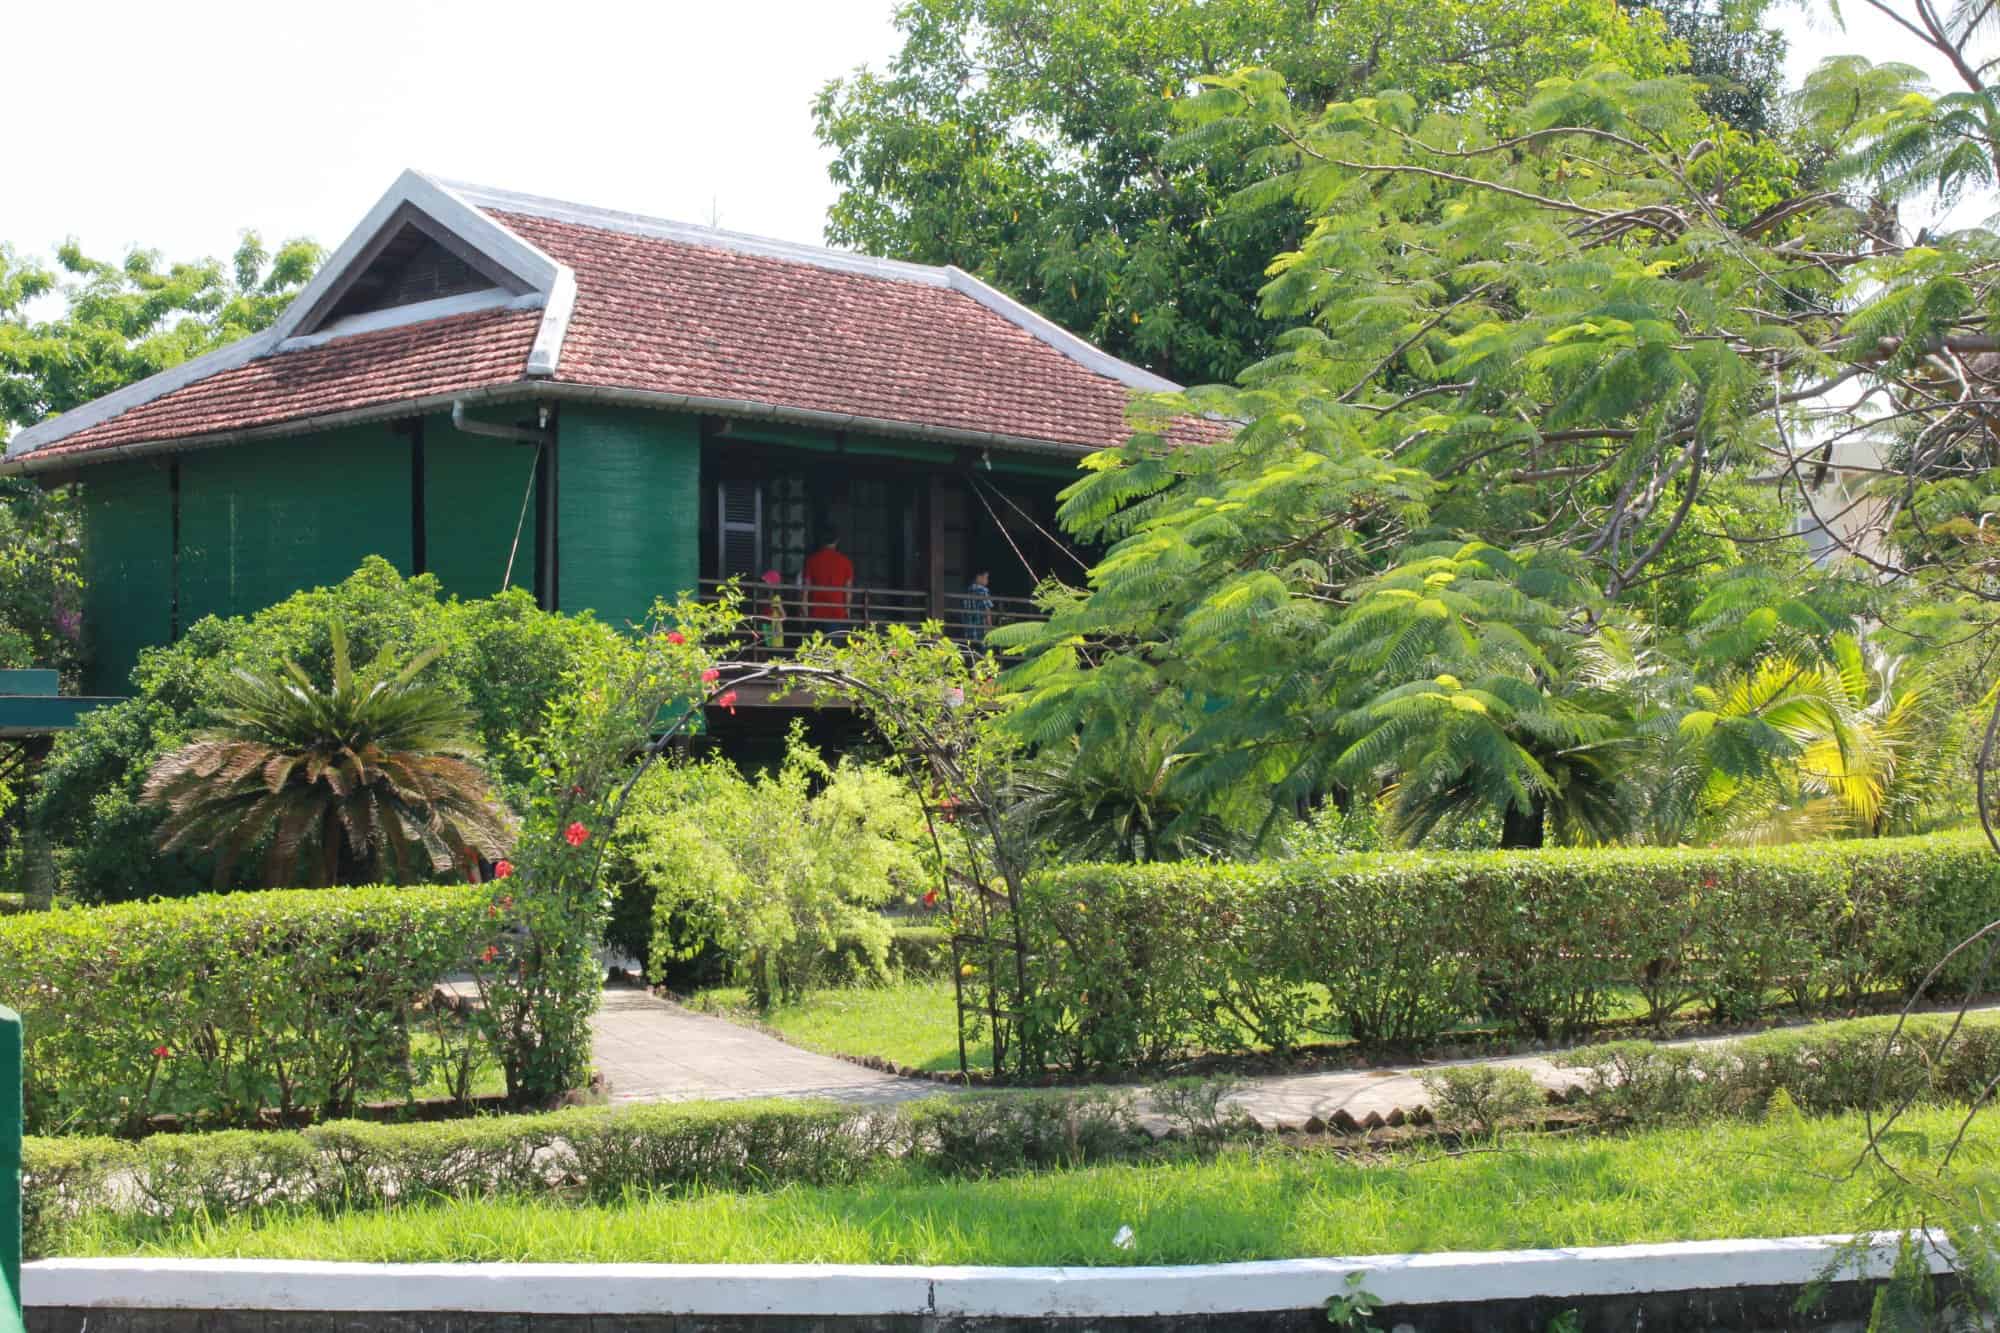 Stilt house of Ho Chi Minh